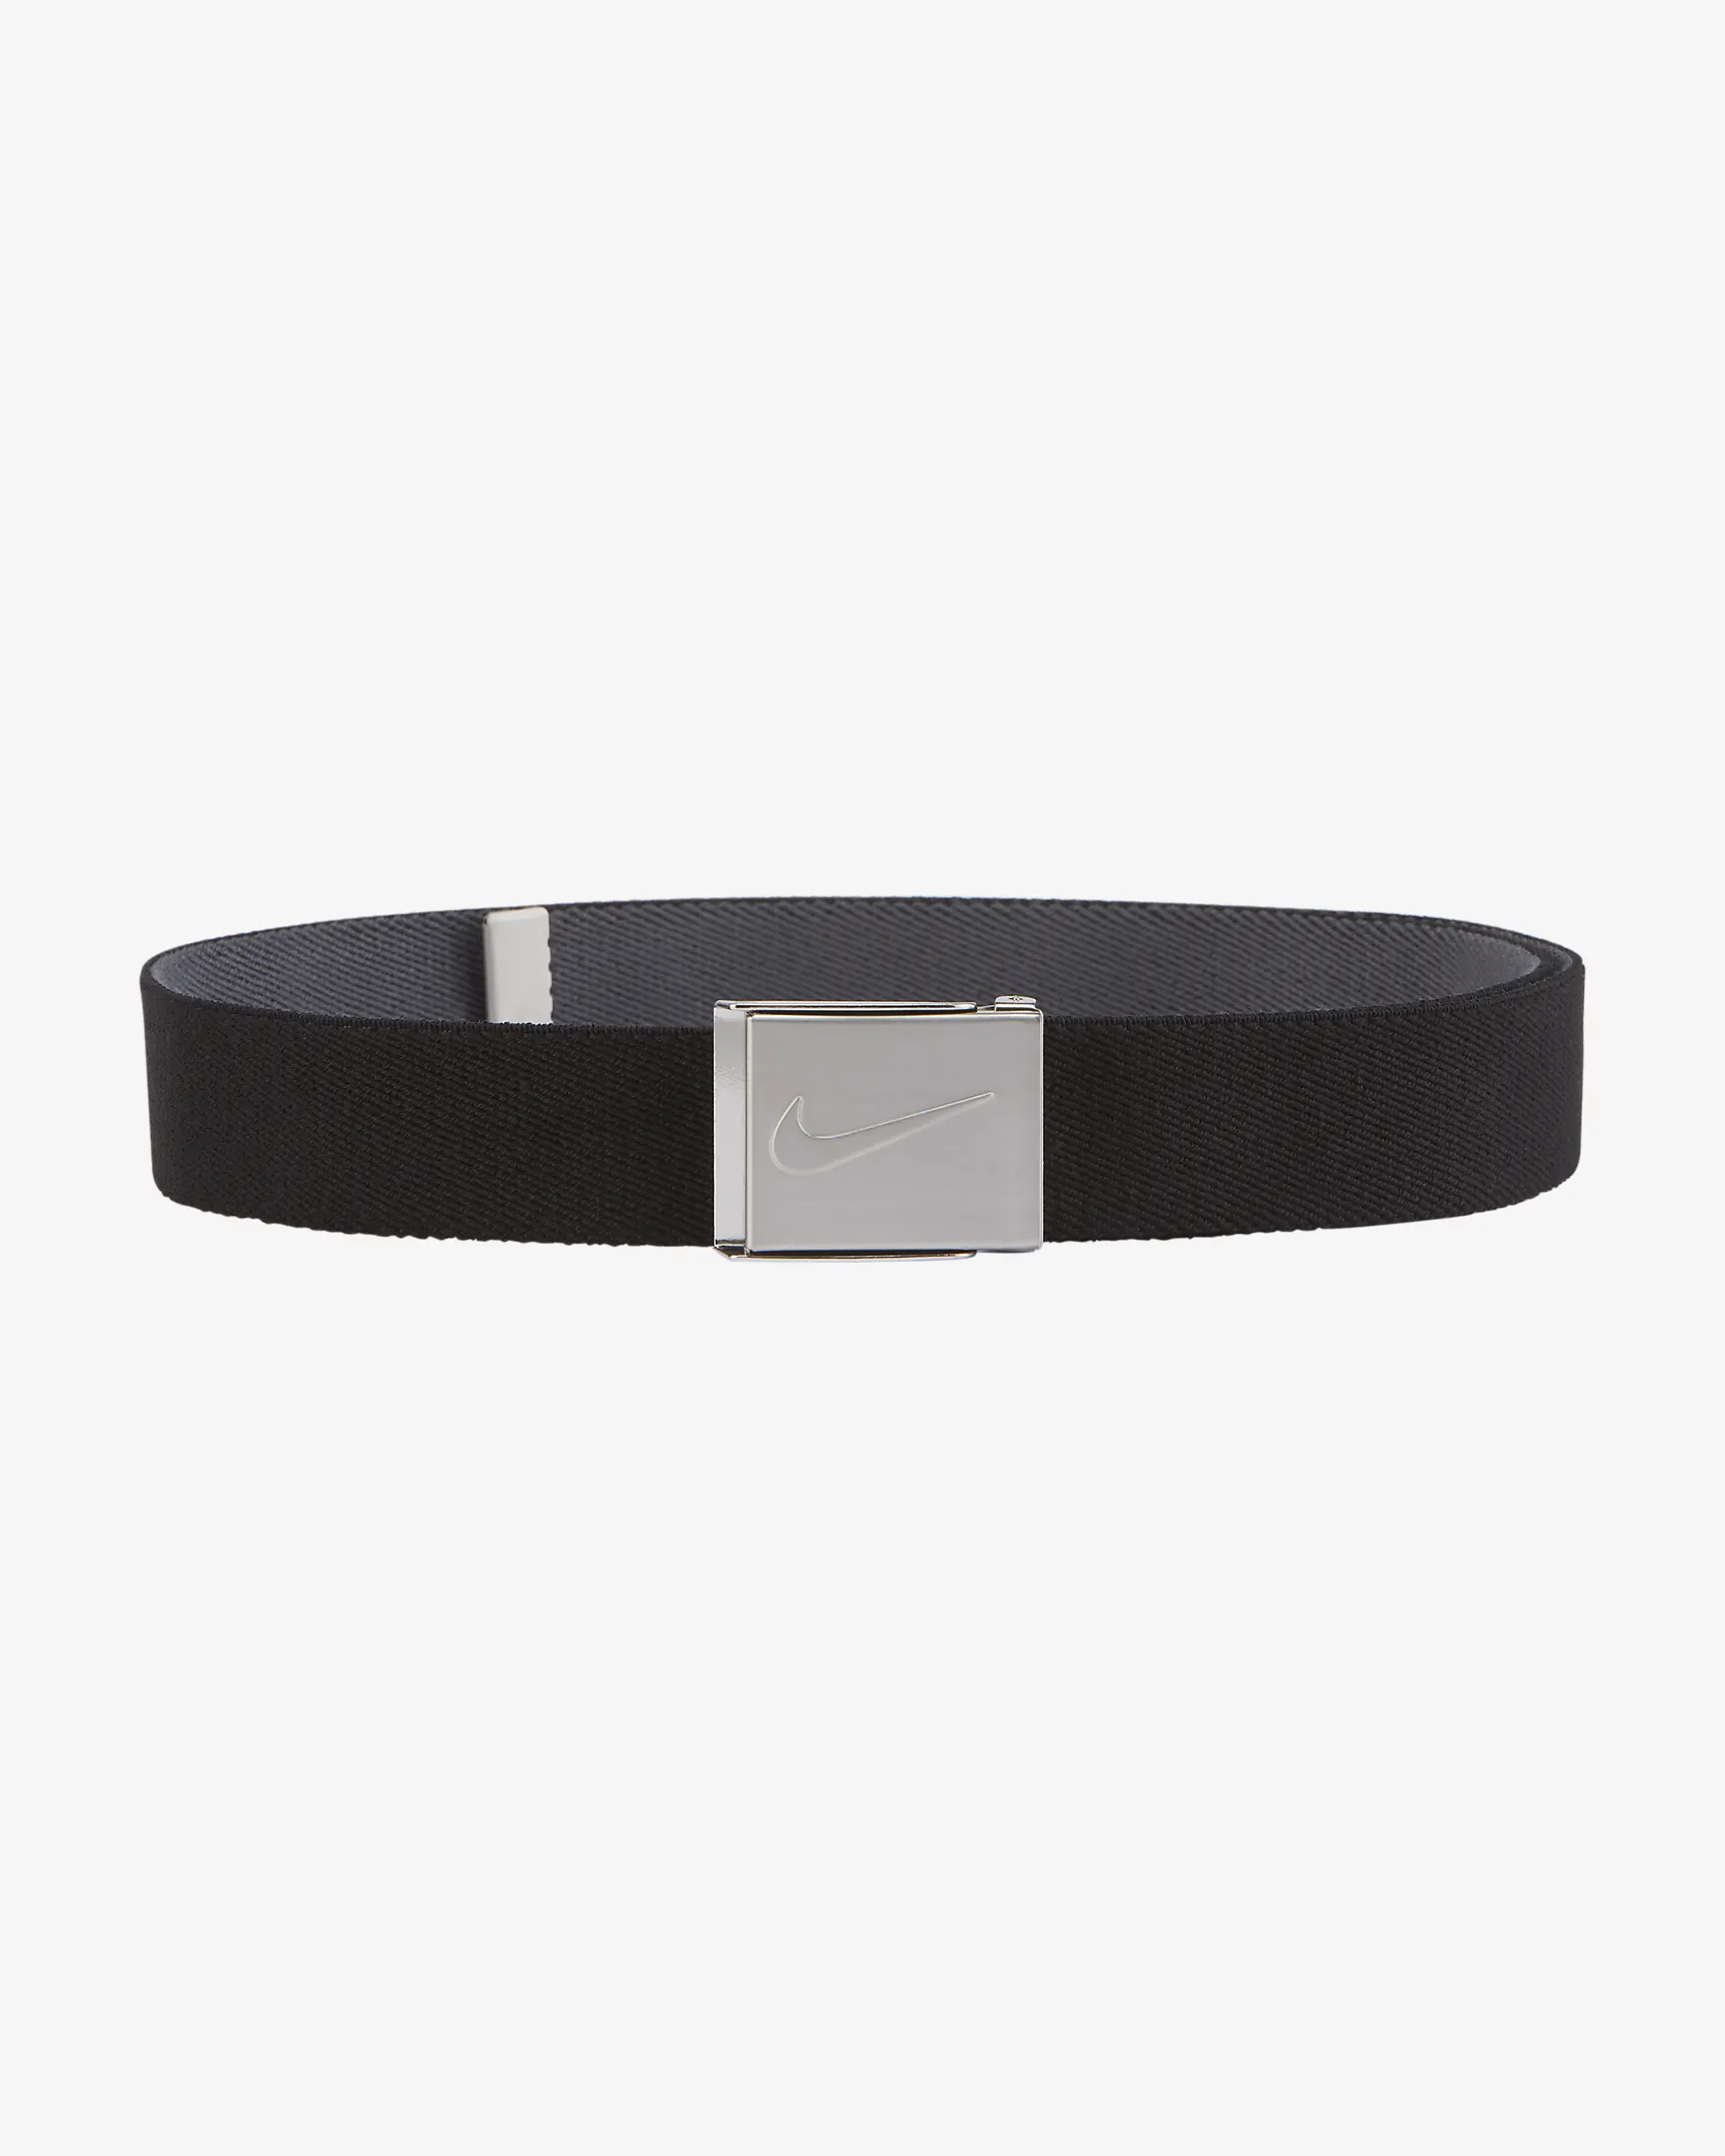 Nike | 11280003 | Web Belt Reversible | Black / Grey